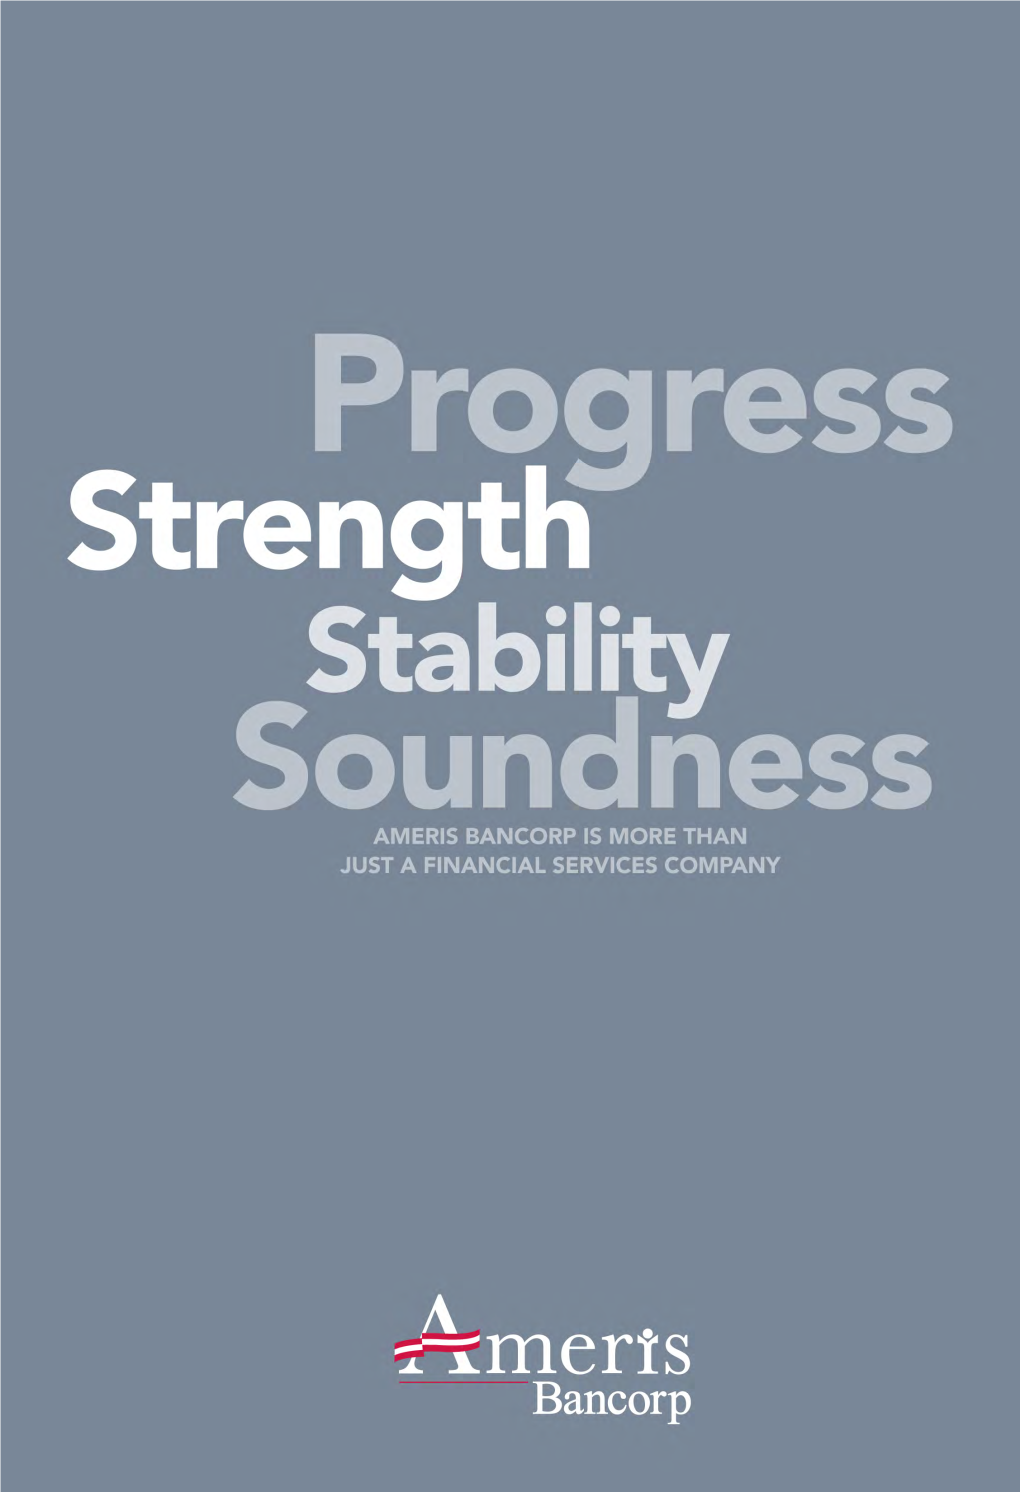 Ameris Bancorp’S Progress, Strength, Stability, and Soundness